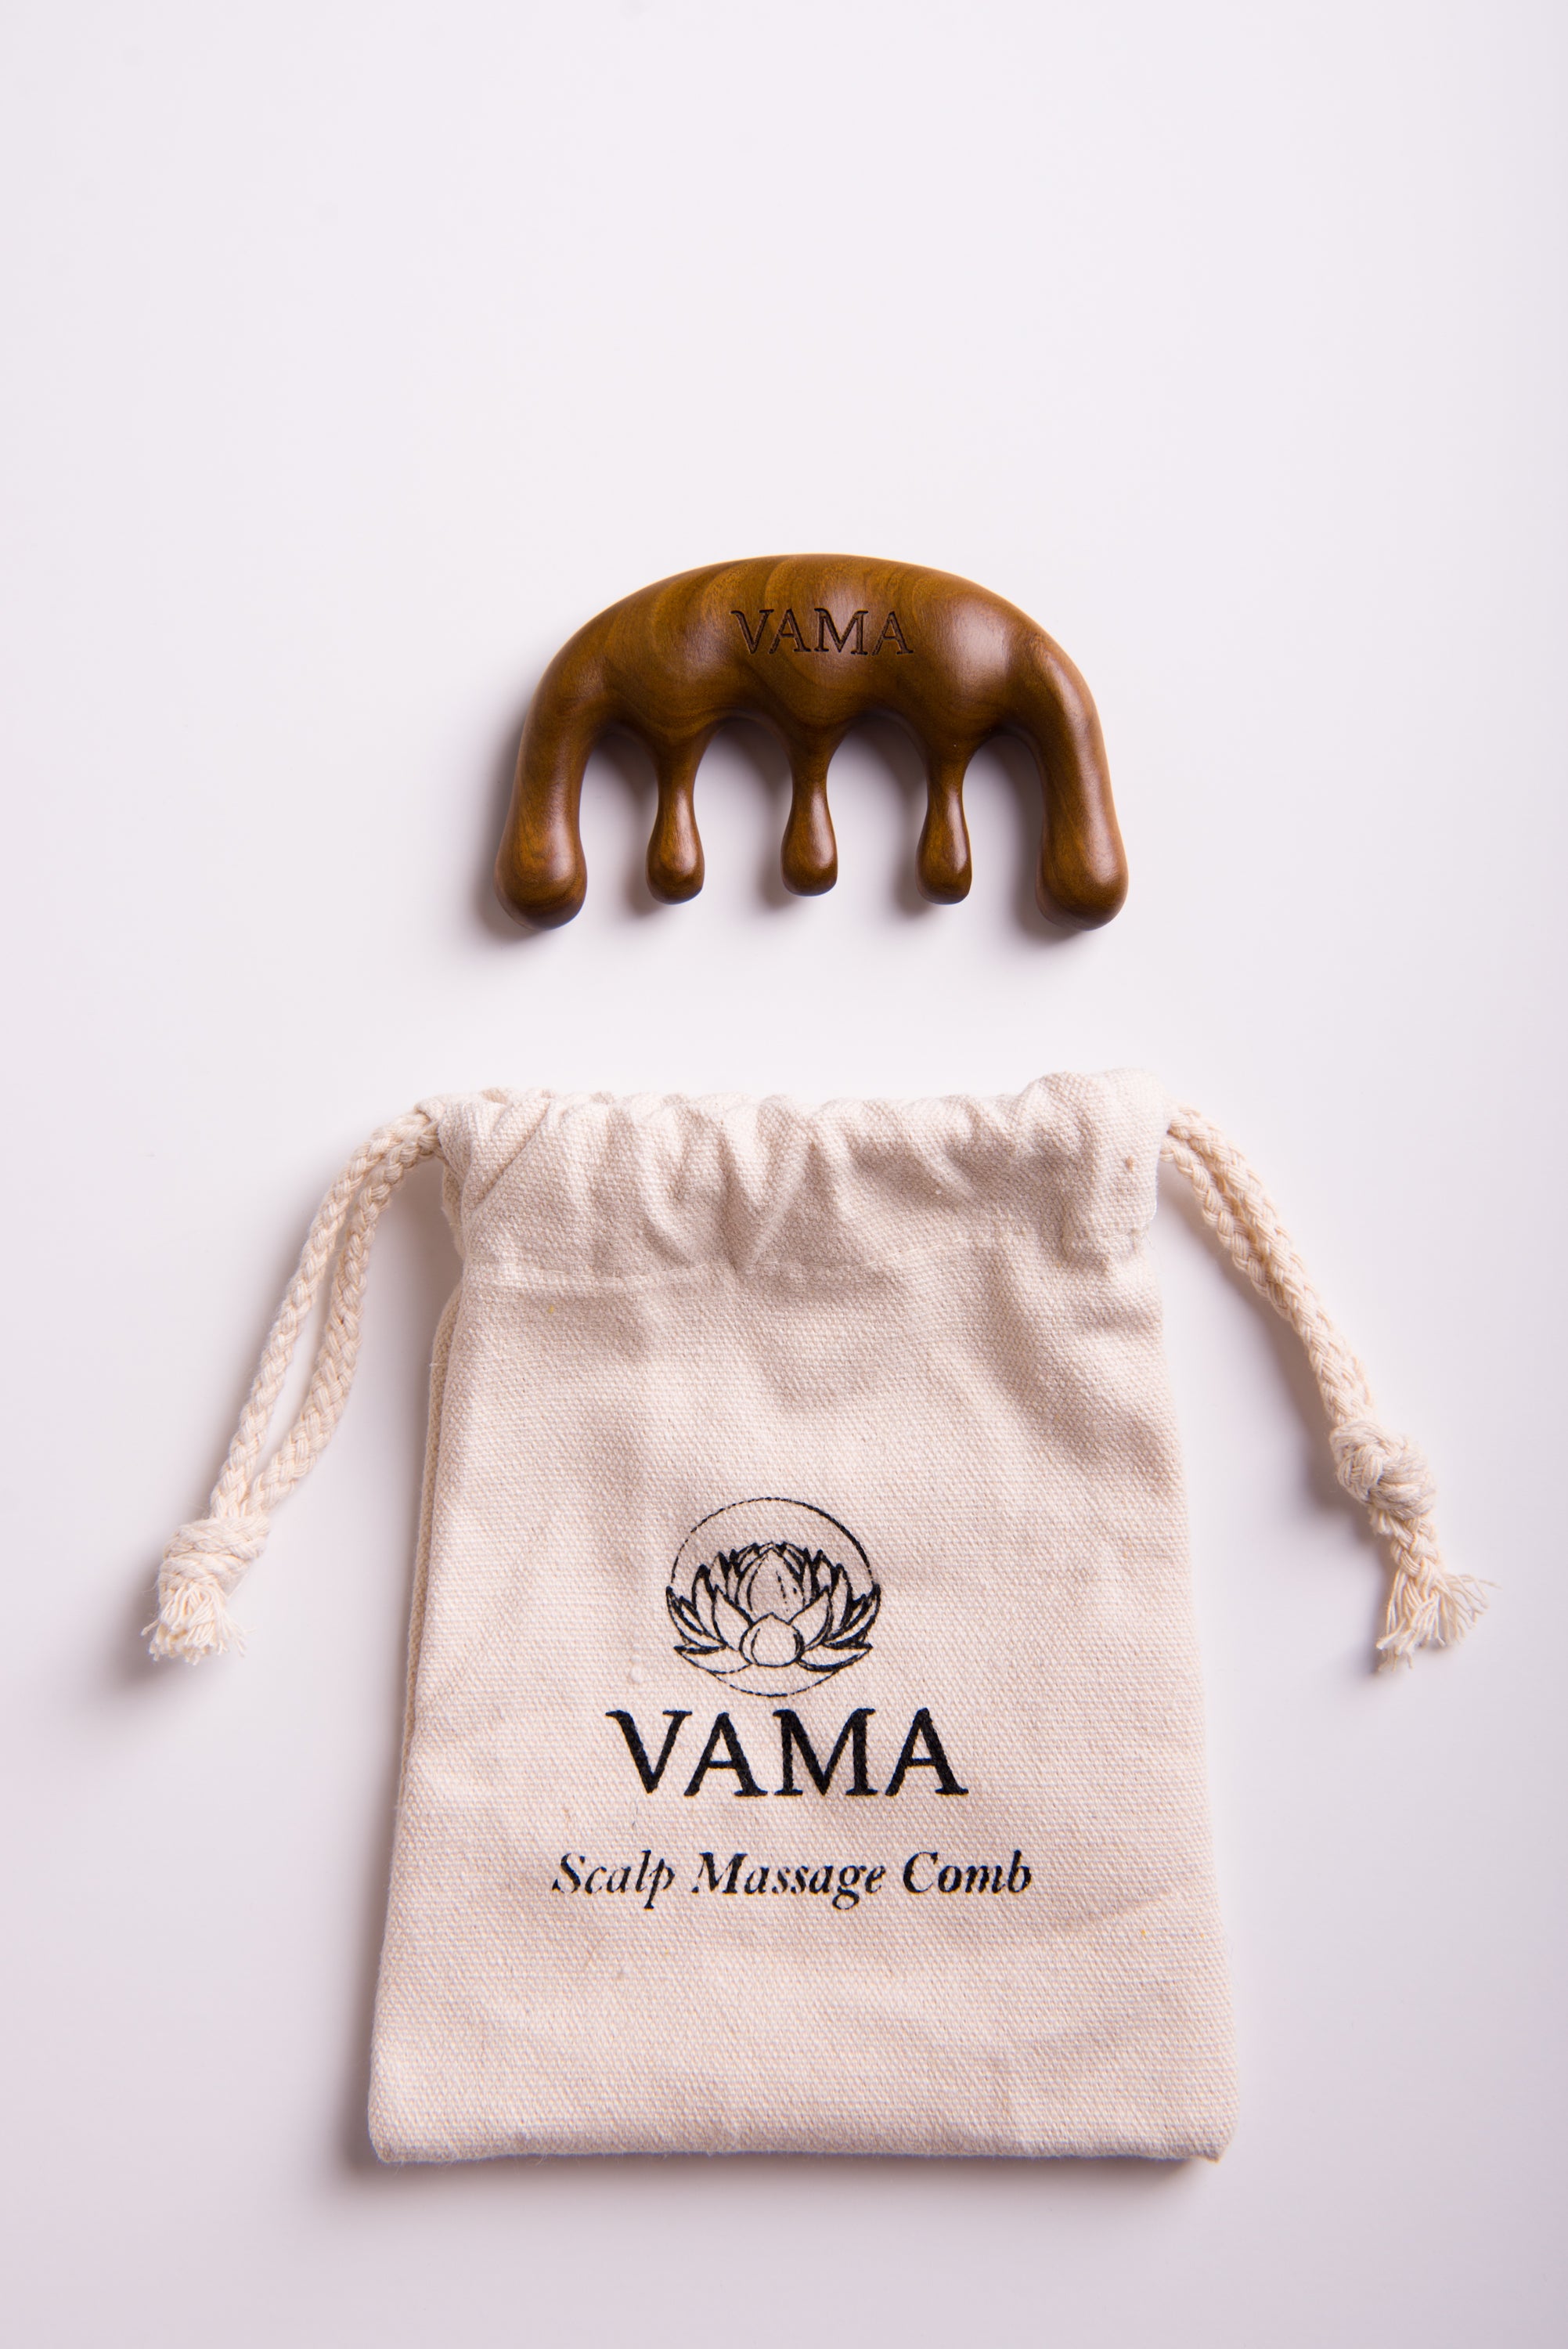 VAMA Scalp Massage Comb